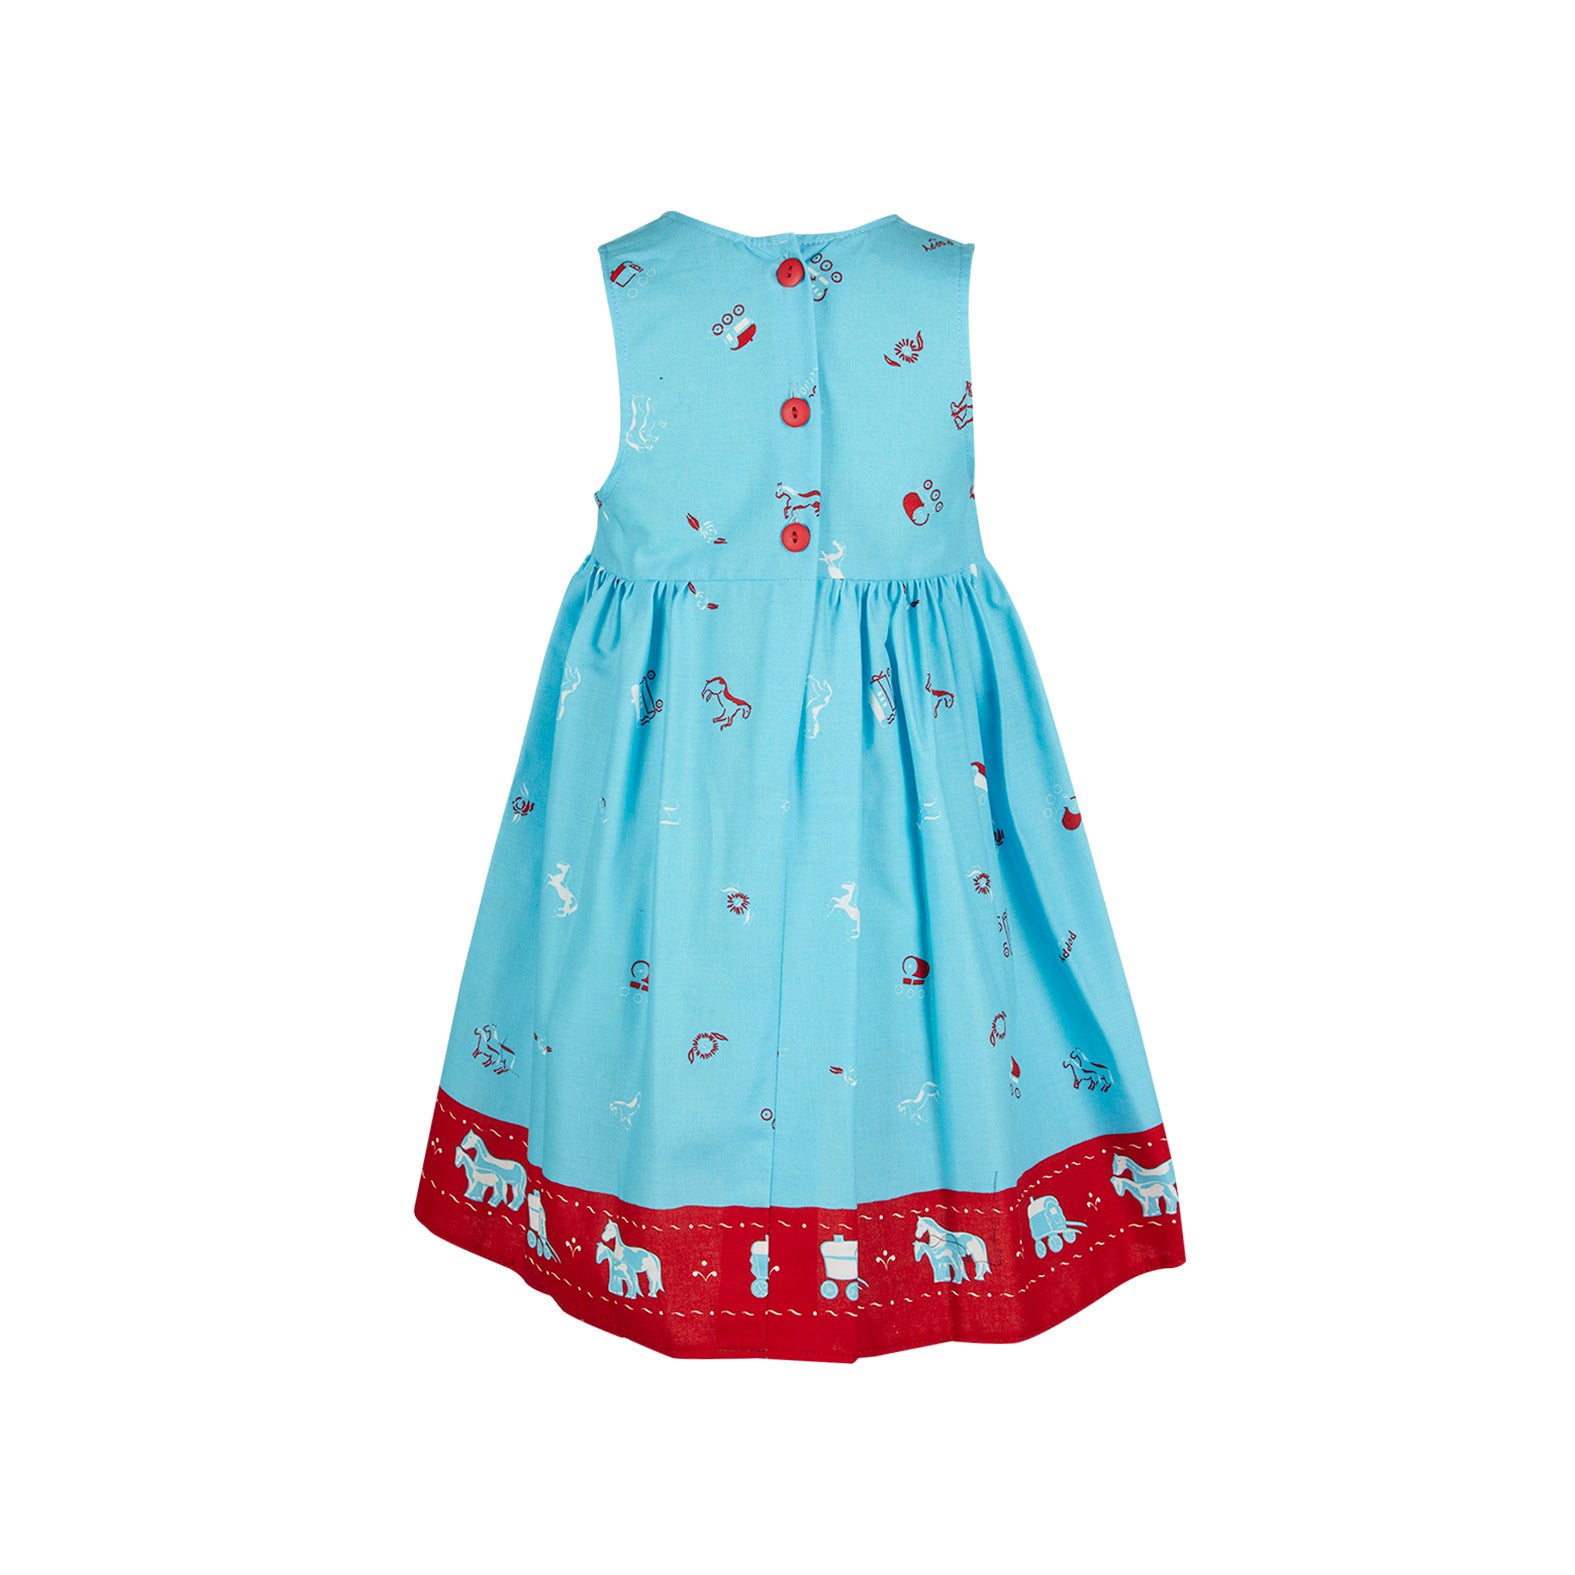 Archive Poppy - Katie Pinafore Dress - Gypsy Caravan Turquoise